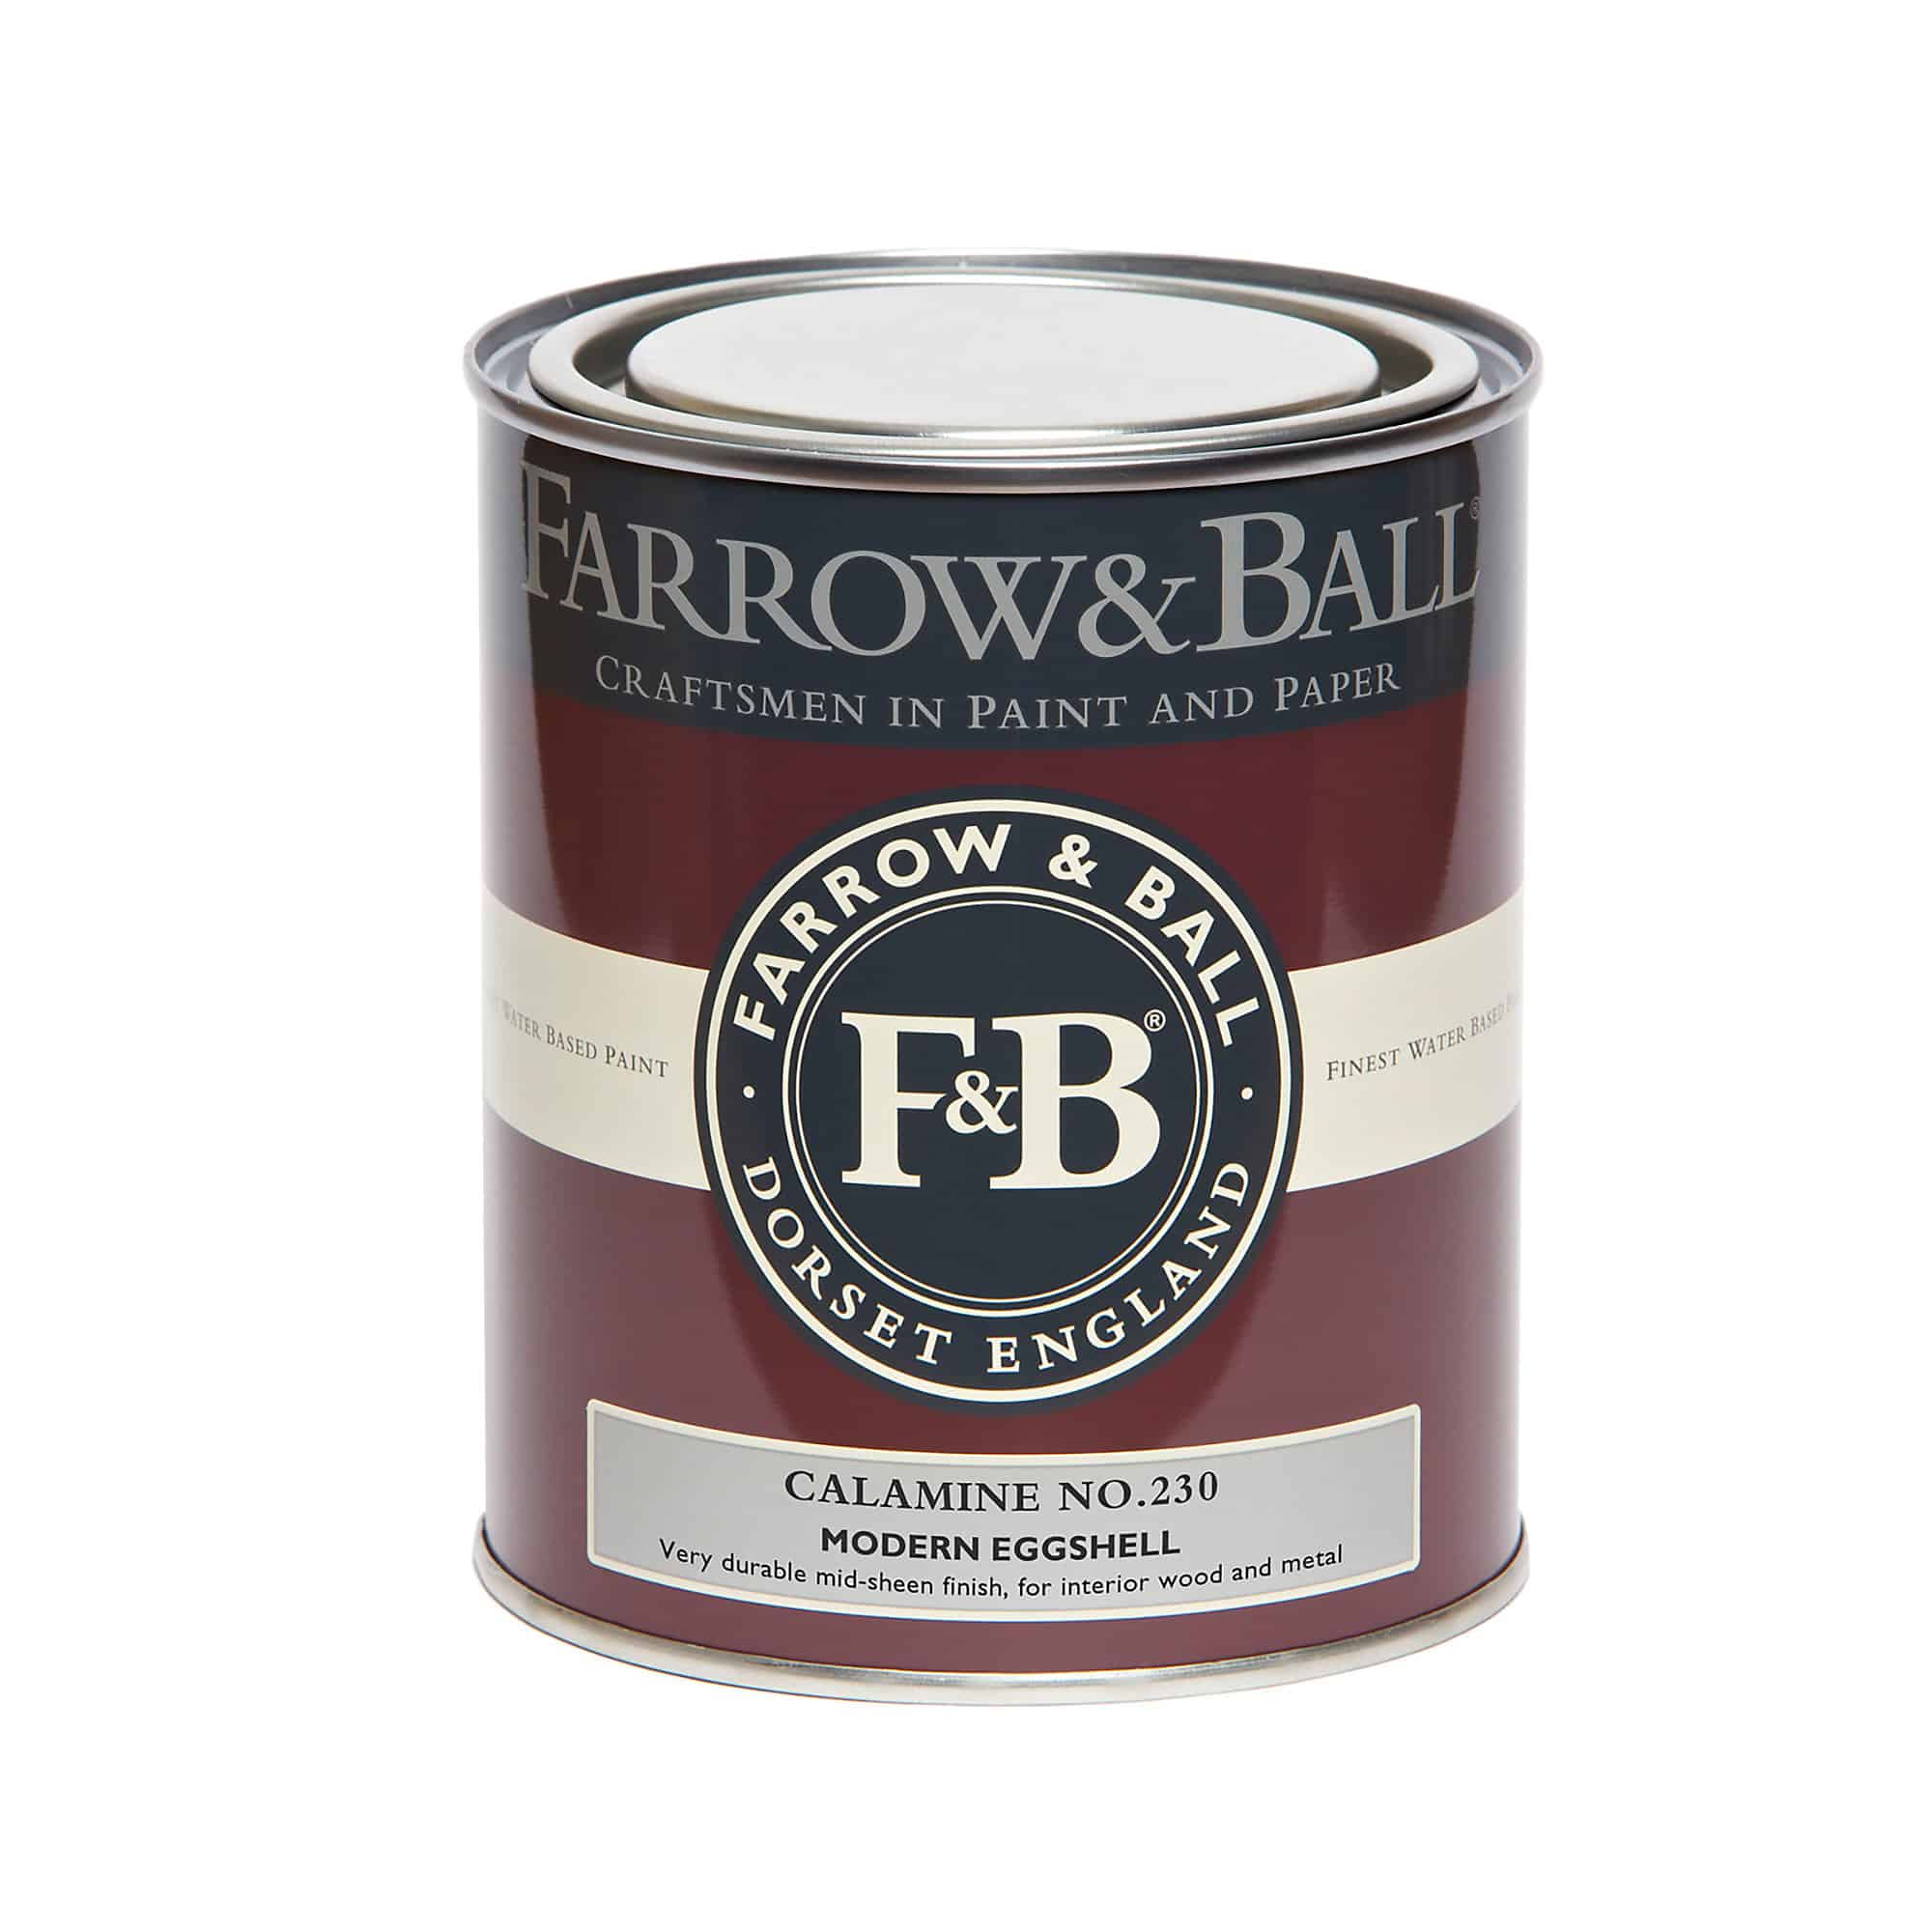 Farrow & Ball Eggshell Paint,Modern Calamine No.230 750ml-7307